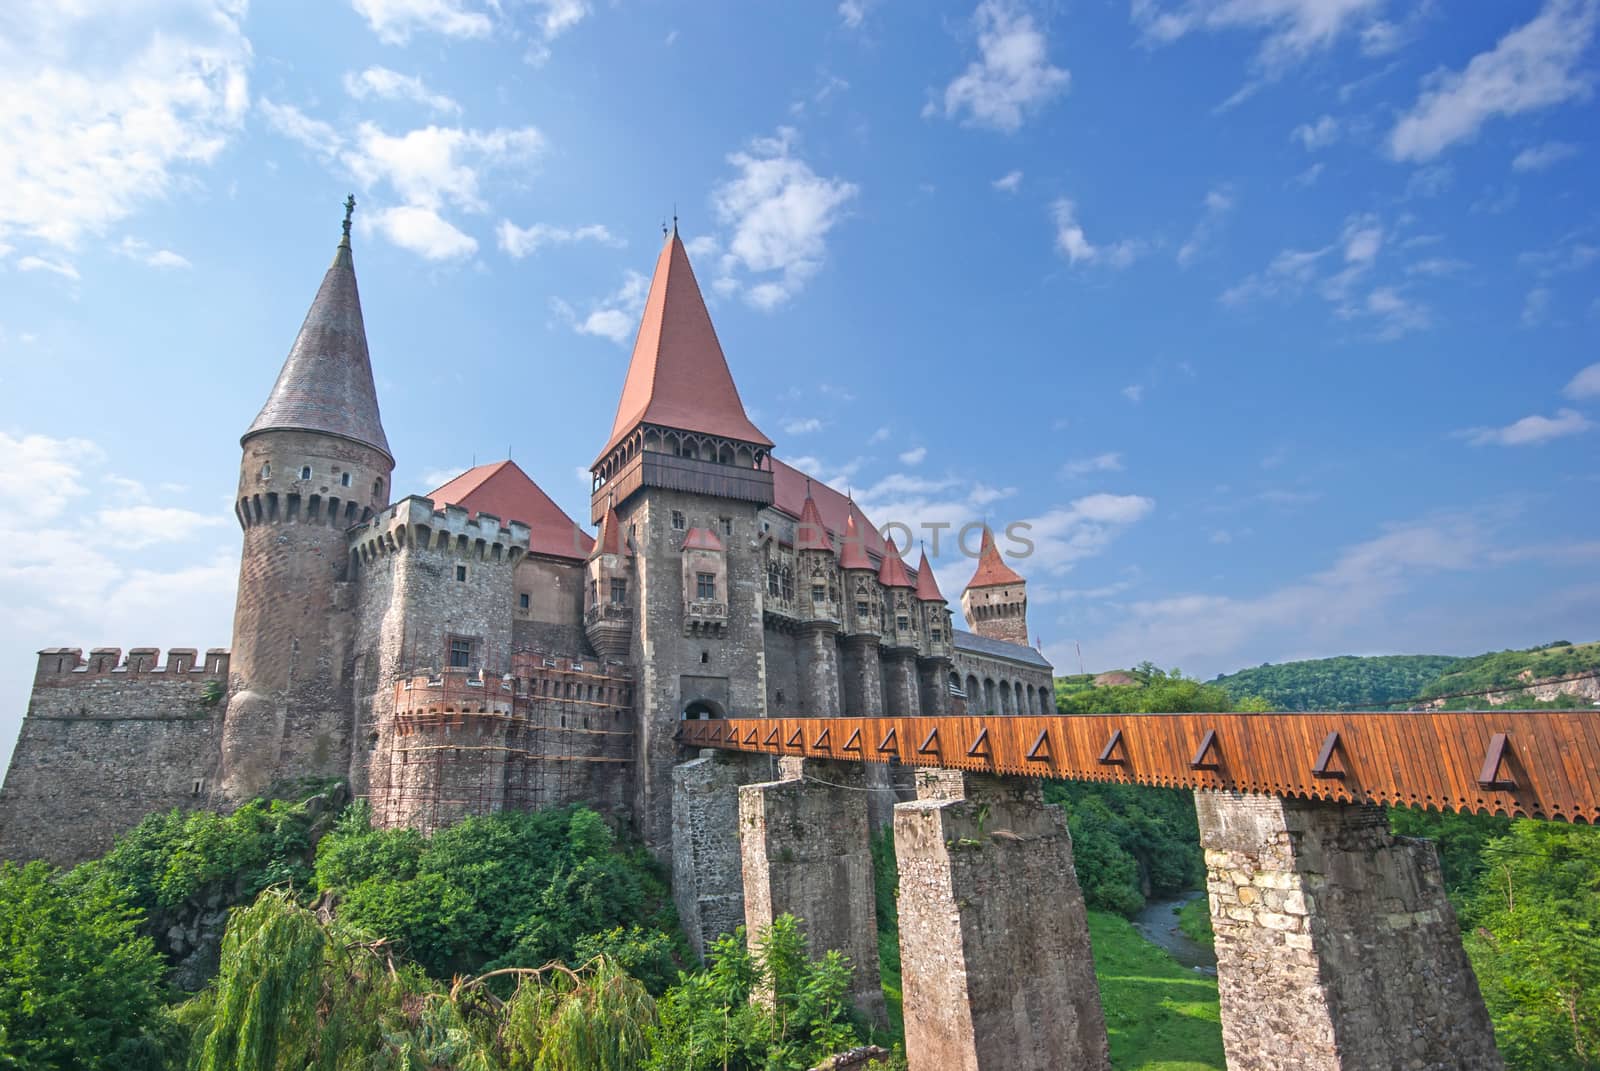 Corvin castle, a medieval building in Hunedoara, Romania